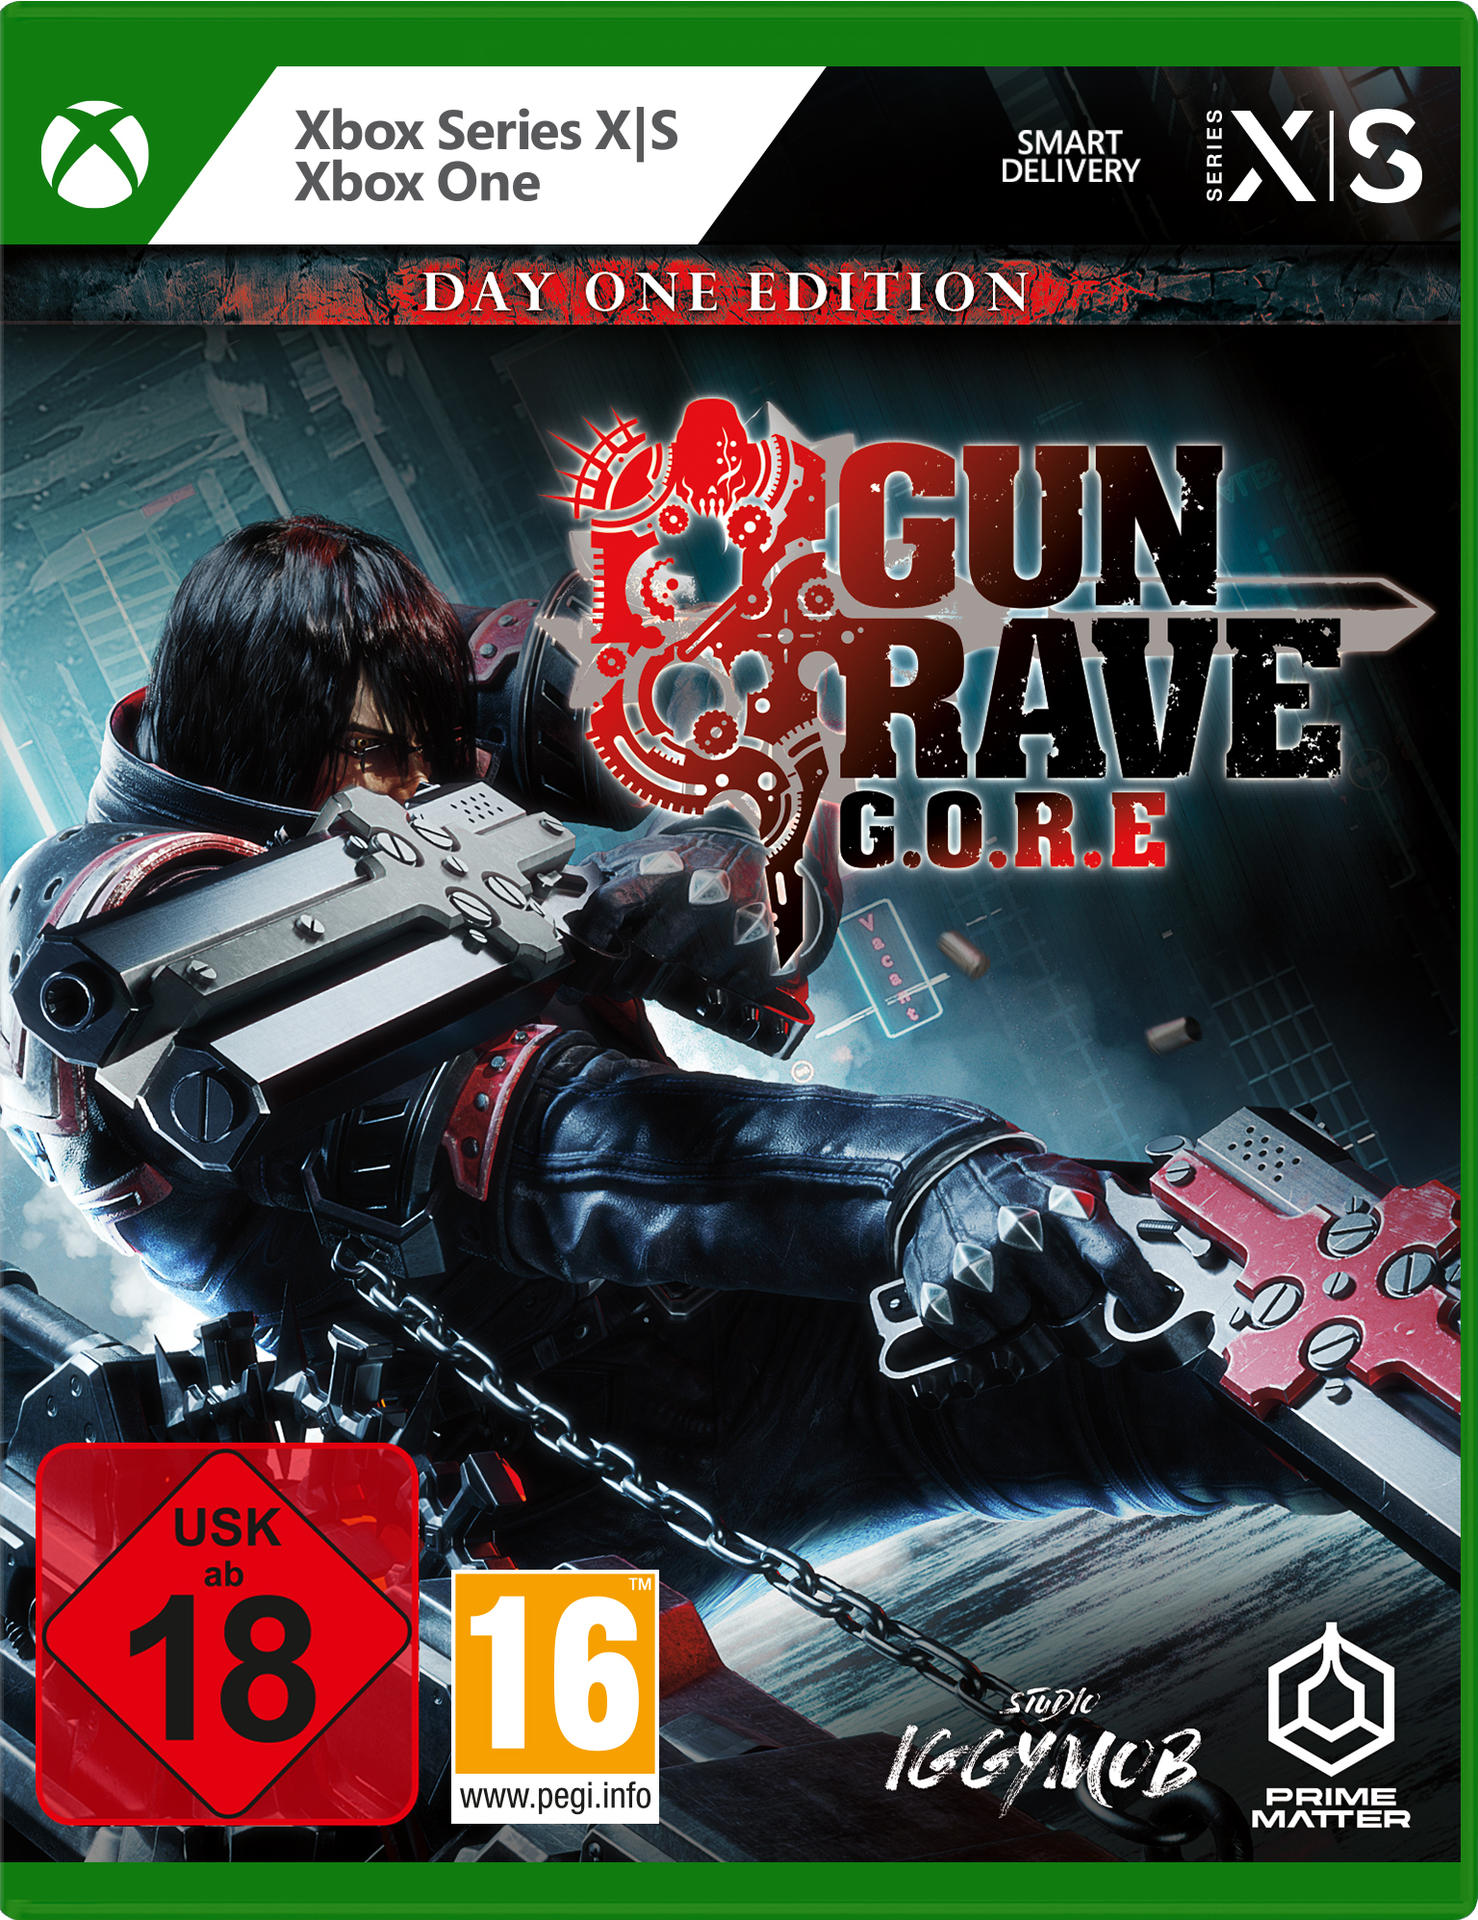 One G.O.R.E. Series Day - [Xbox Gungrave: - X|S] Edition